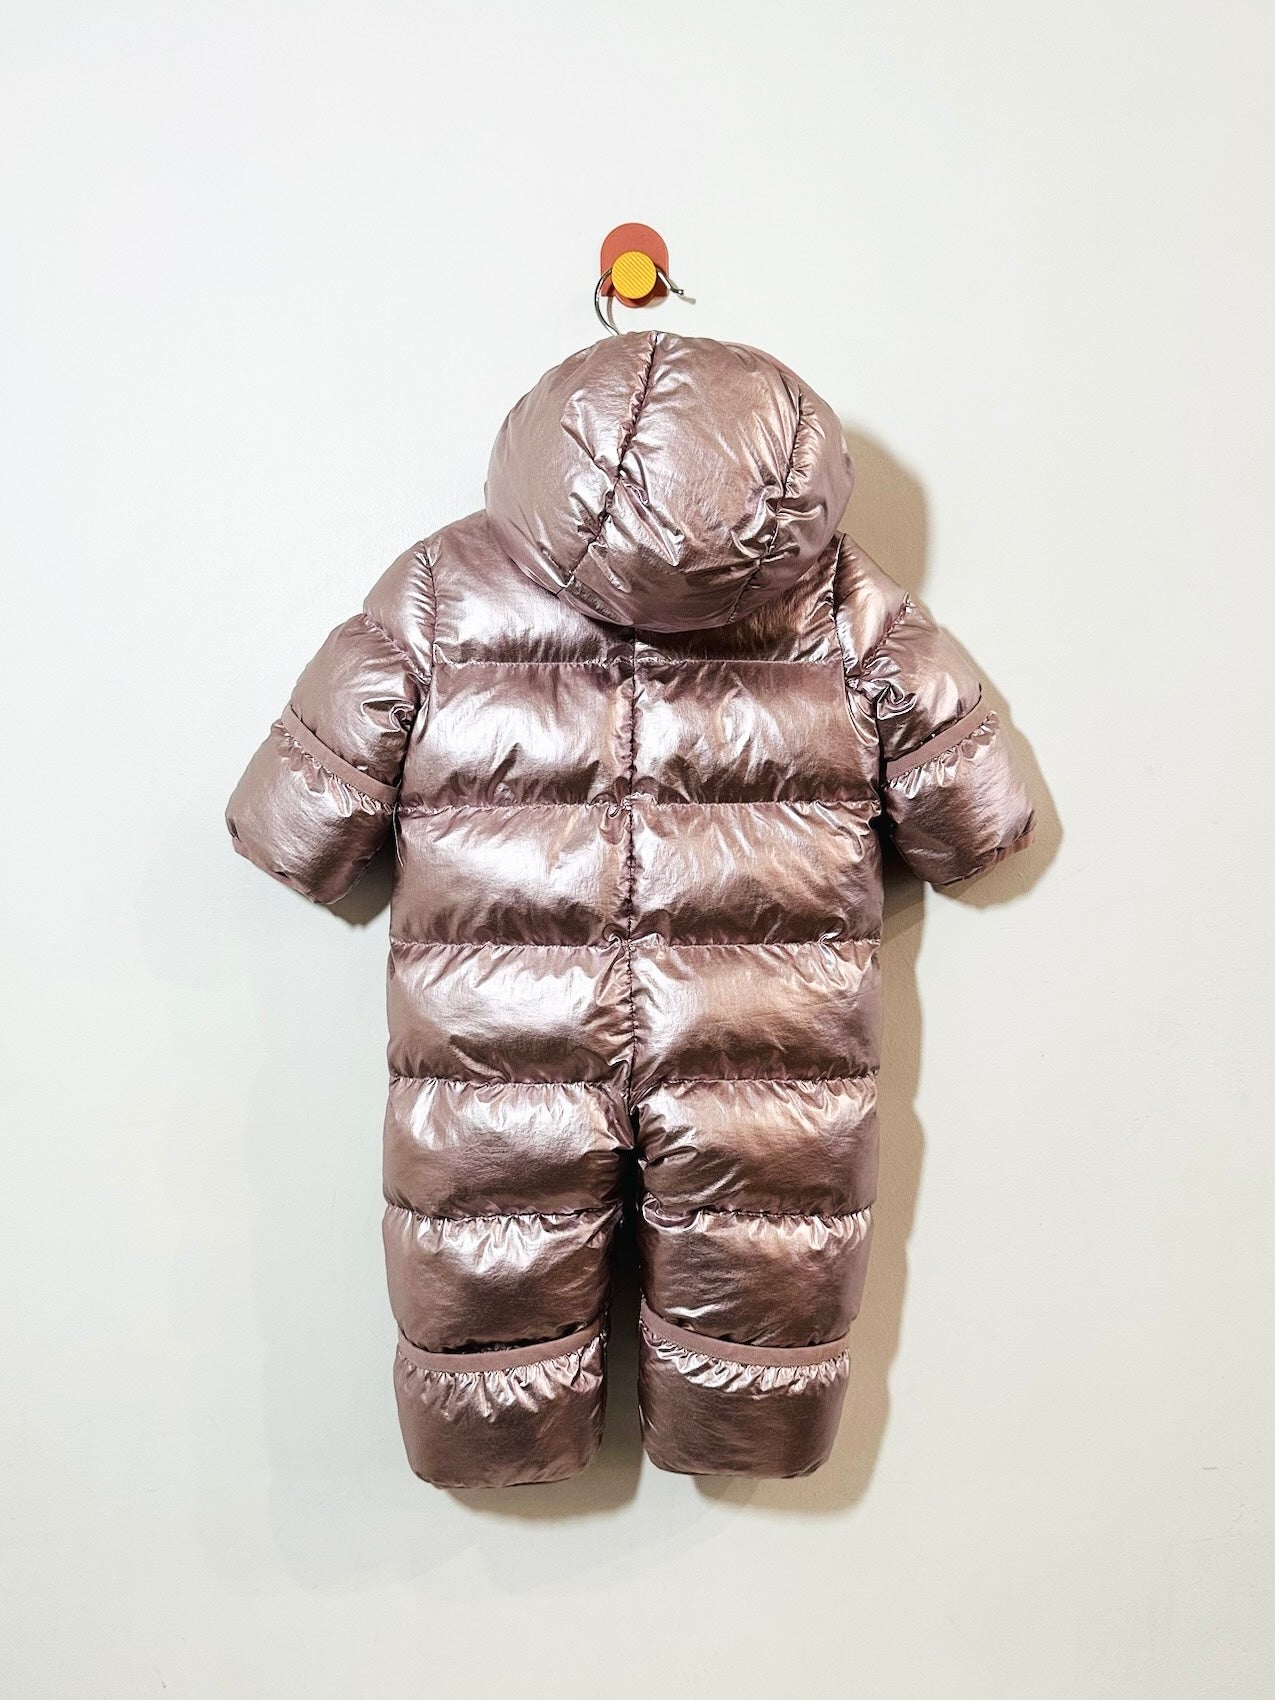 Kith Metallic Snowsuit / 0-3M